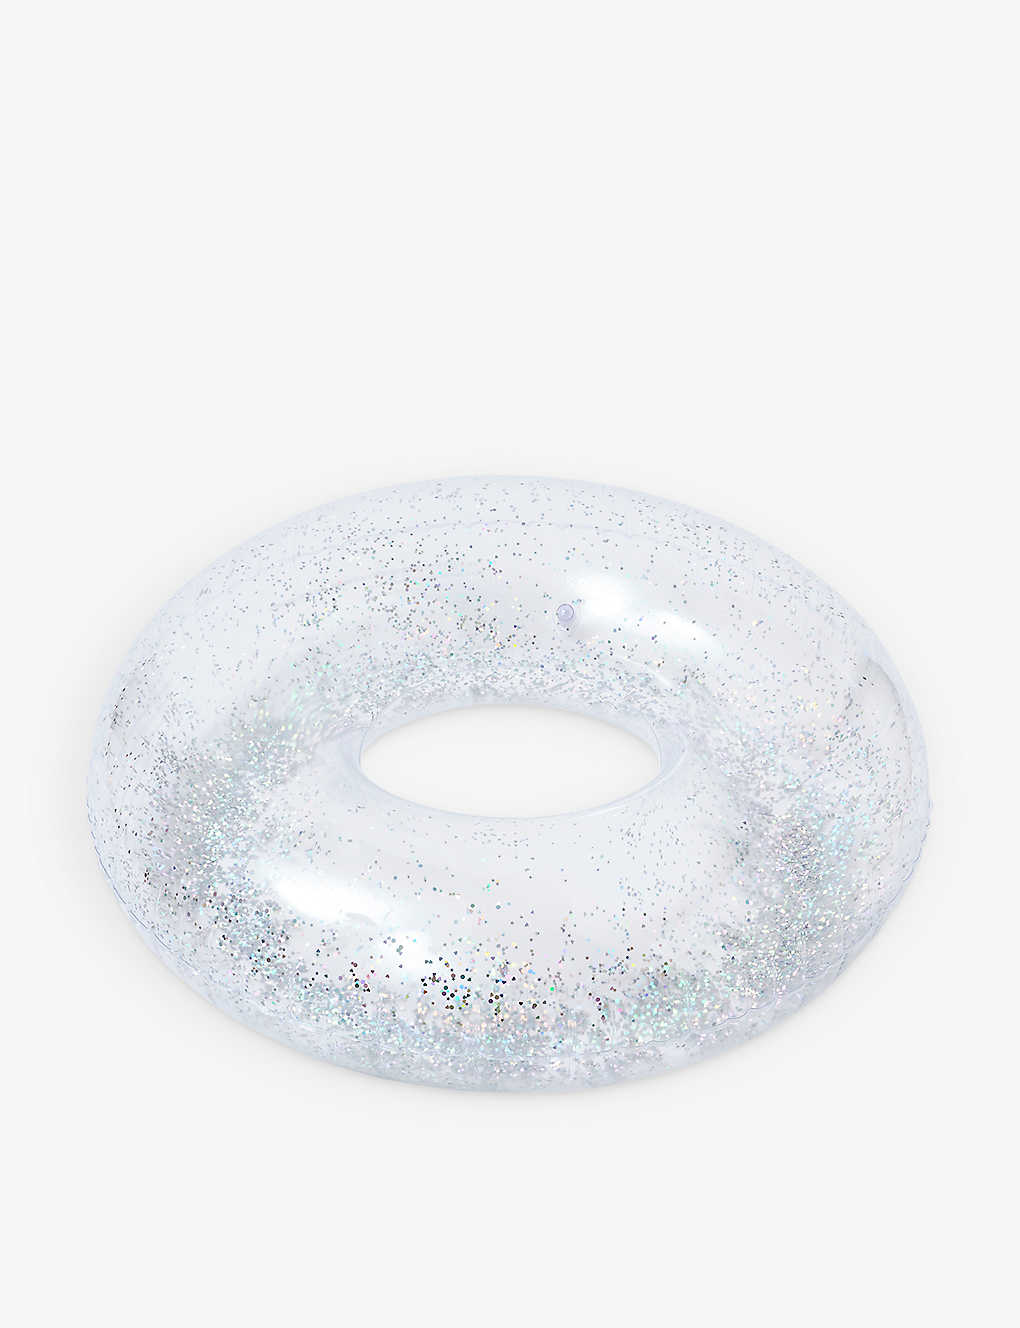 Pool Ring Glitter - عوامة مسبح جليتر شفاف